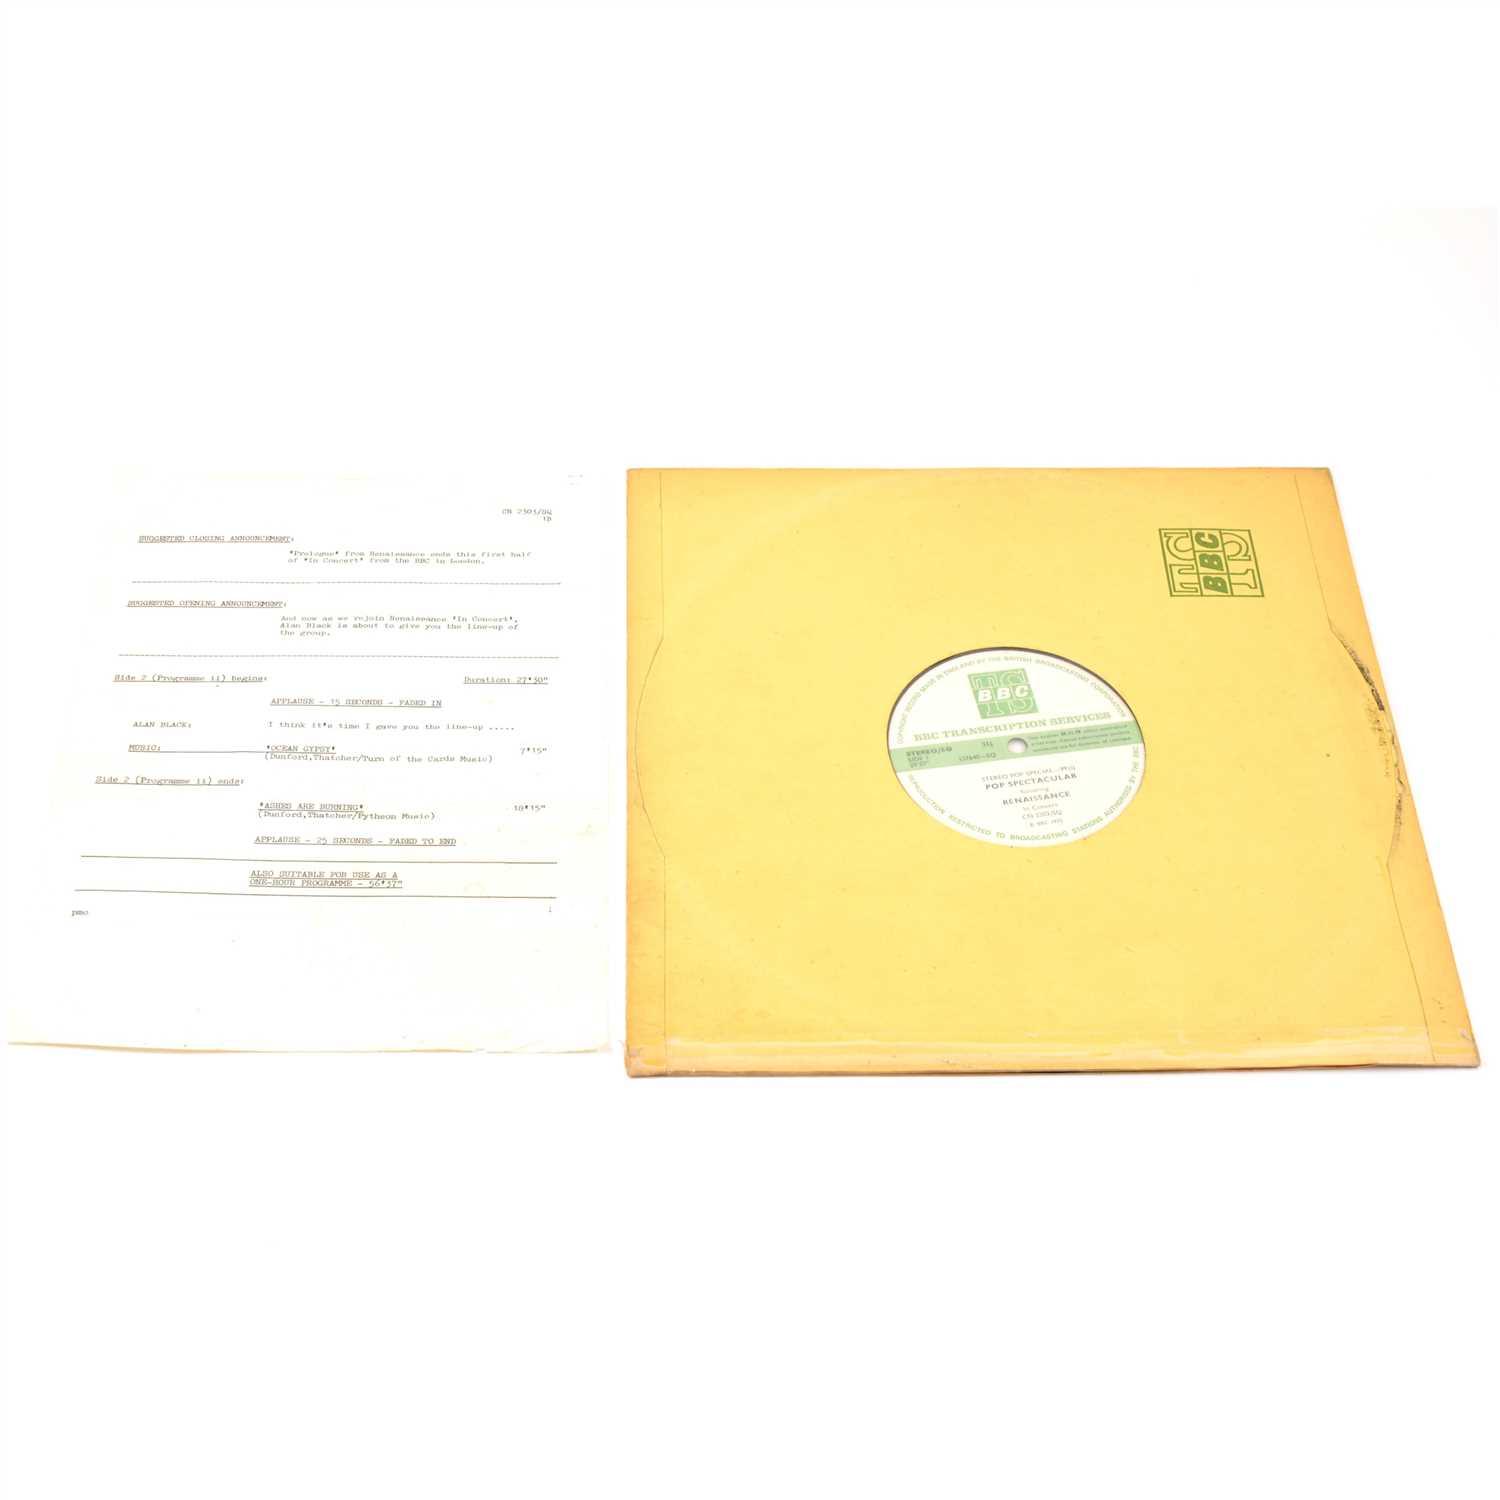 Lot 56 - Renaissance - BBC Transcription Services vinyl record, Live In Concert At The Hippodrome, Golders Green 1975